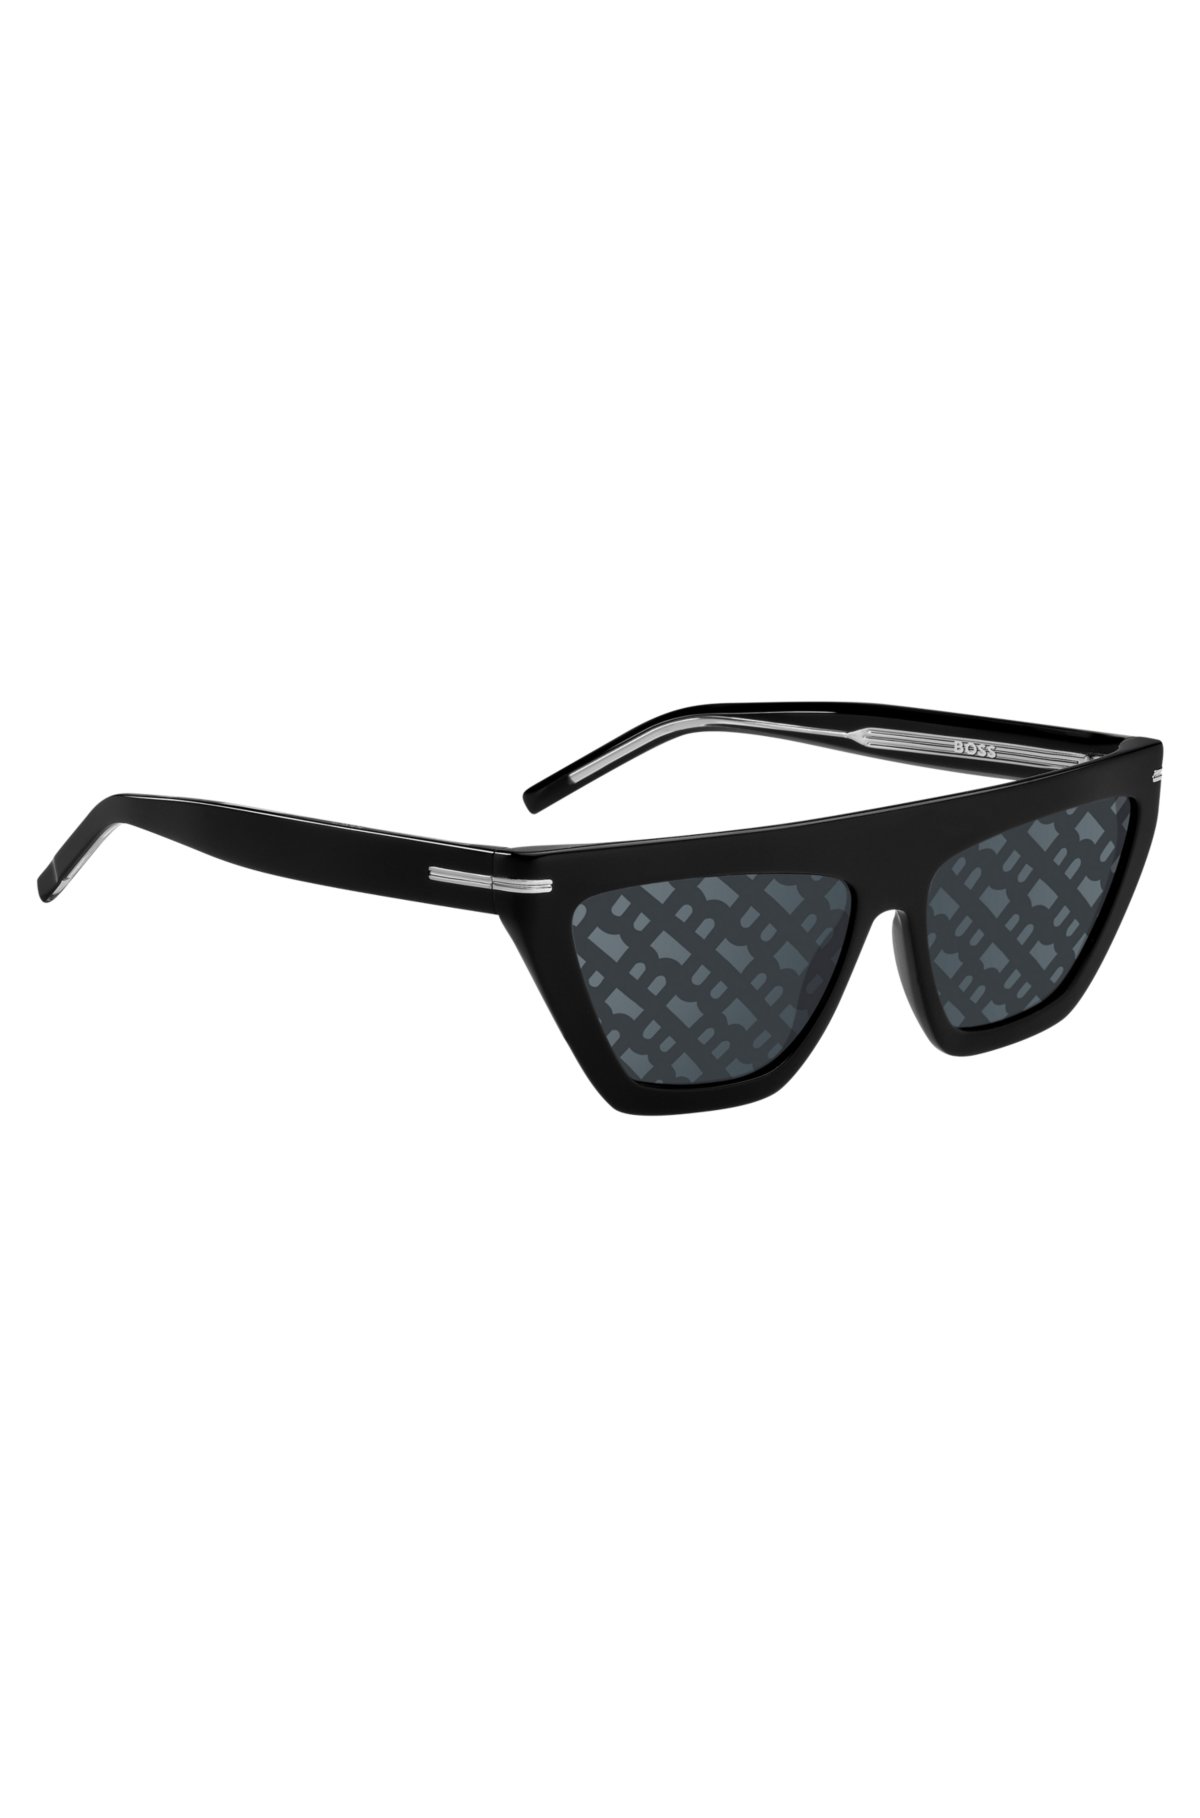 Louis Vuitton My Monogram Cat Eye Sunglasses Black Acetate. Size W